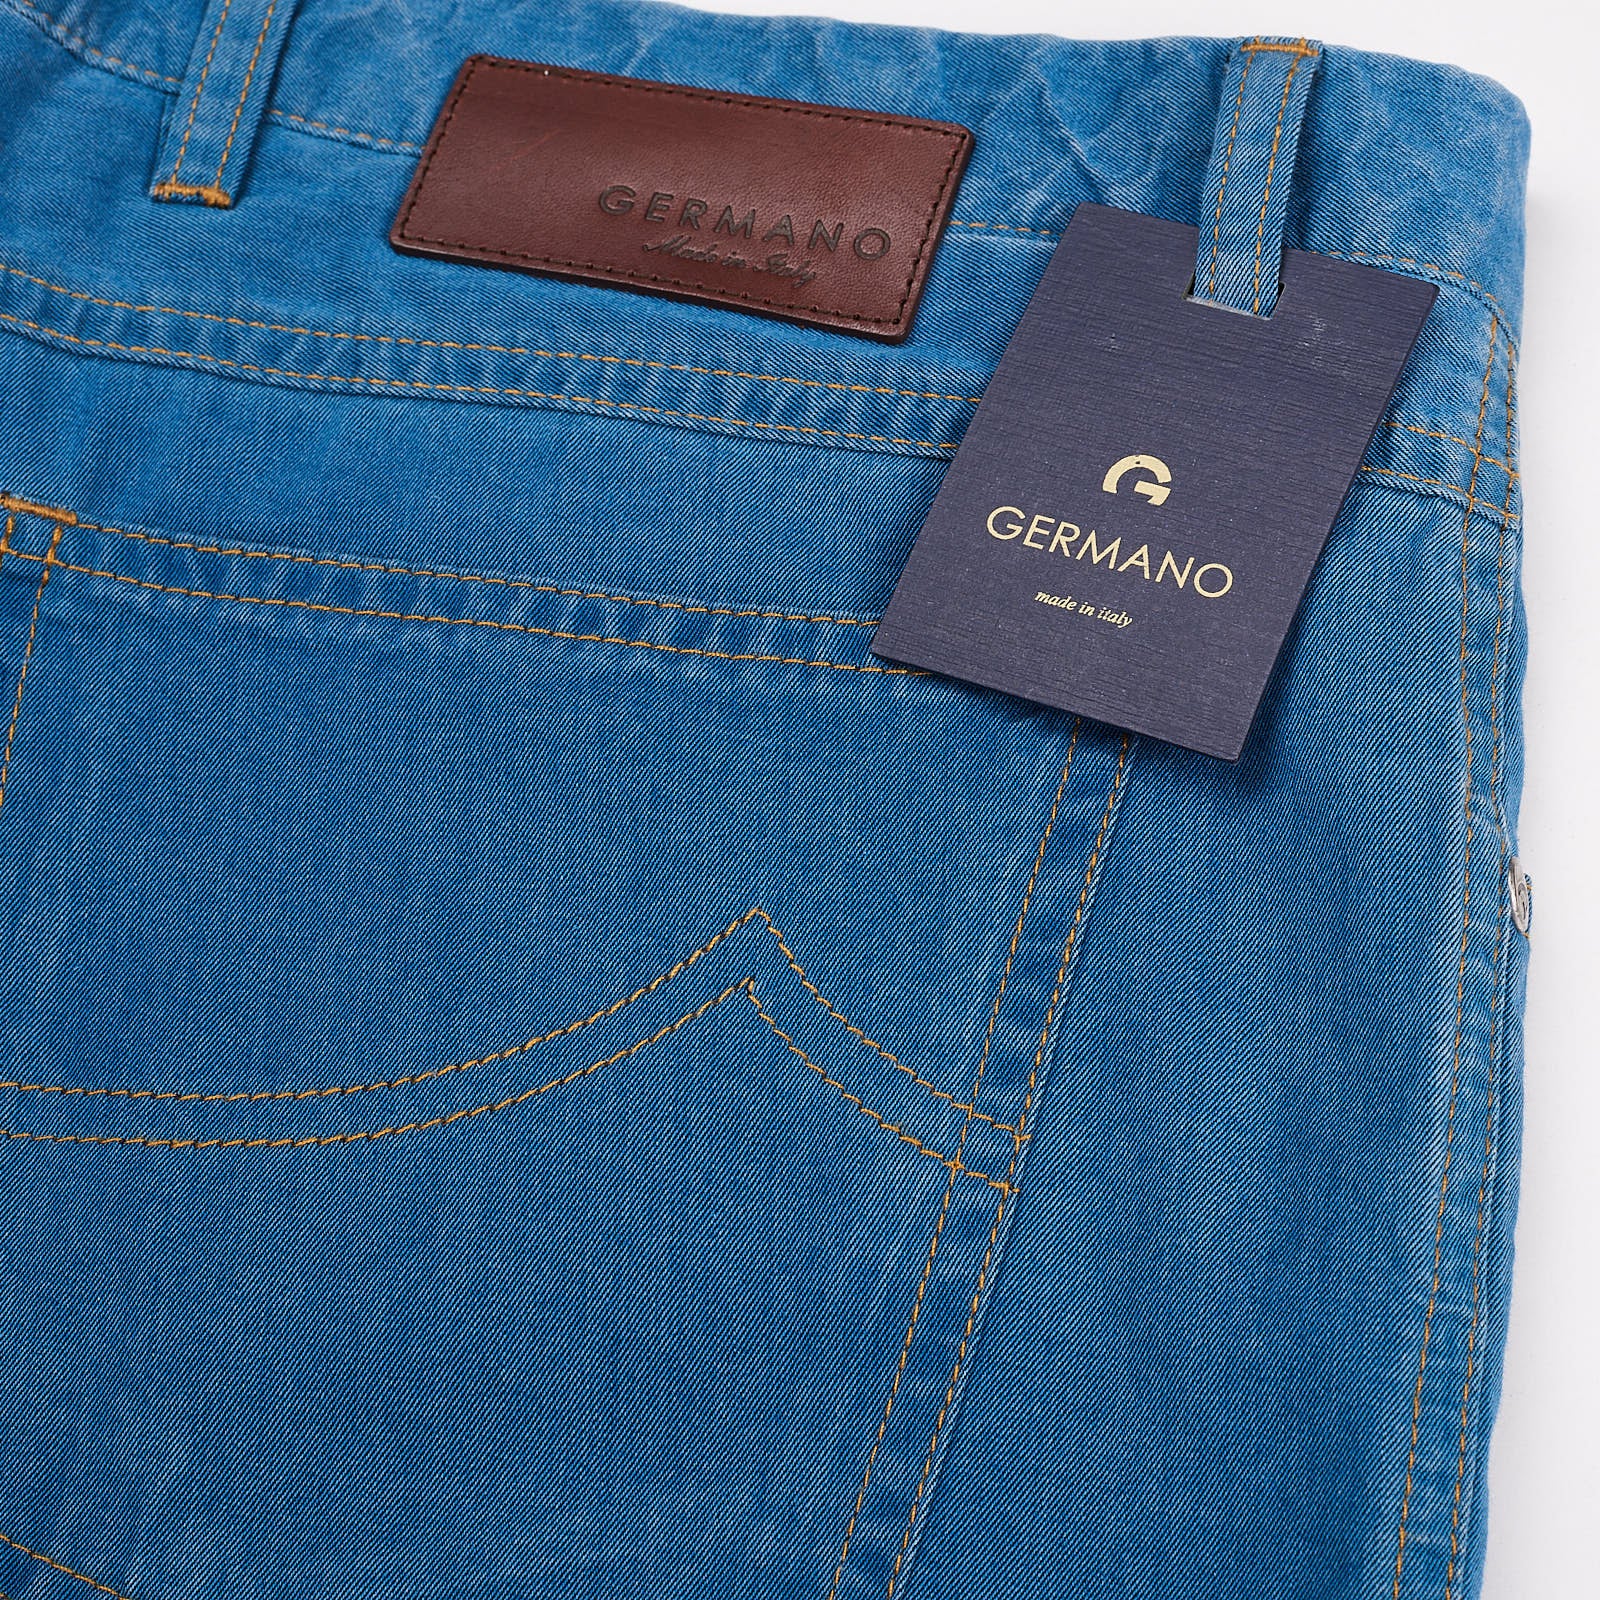 GERMANO Blue Cotton Denim Slim Straight Fit Jeans Pants NEW